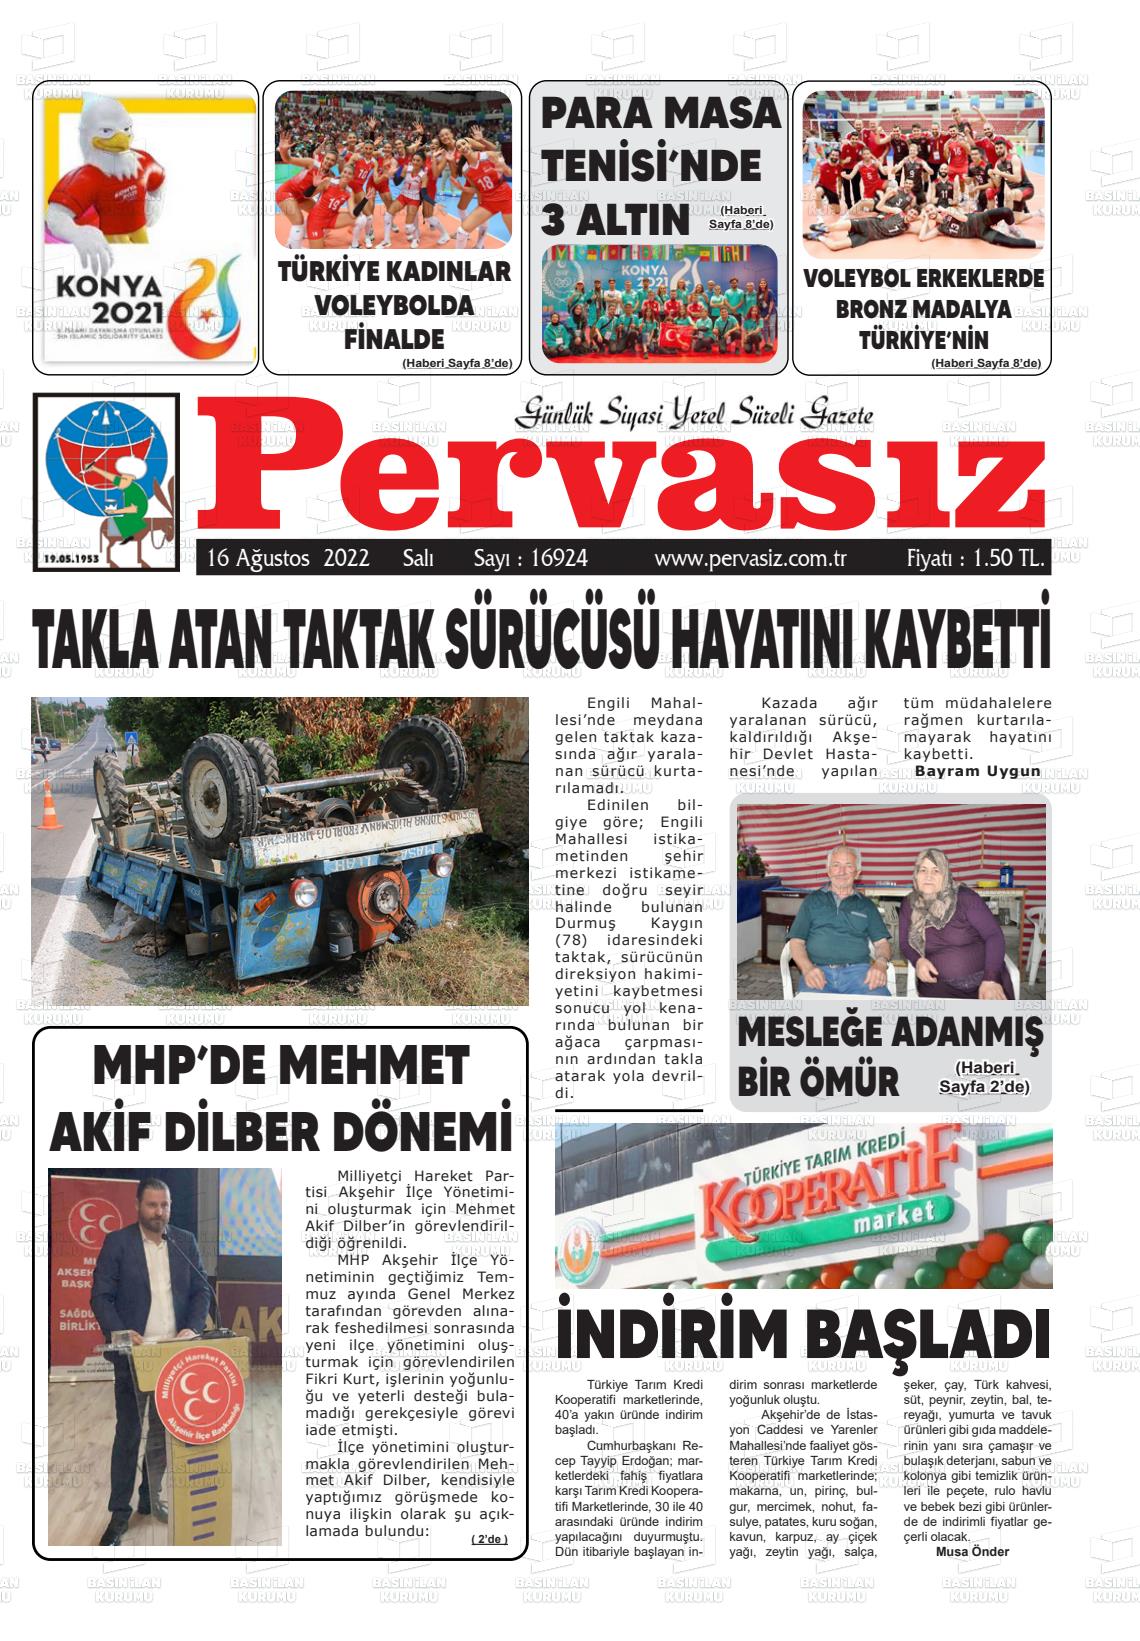 16 Ağustos 2022 Konya Pervasız Gazete Manşeti